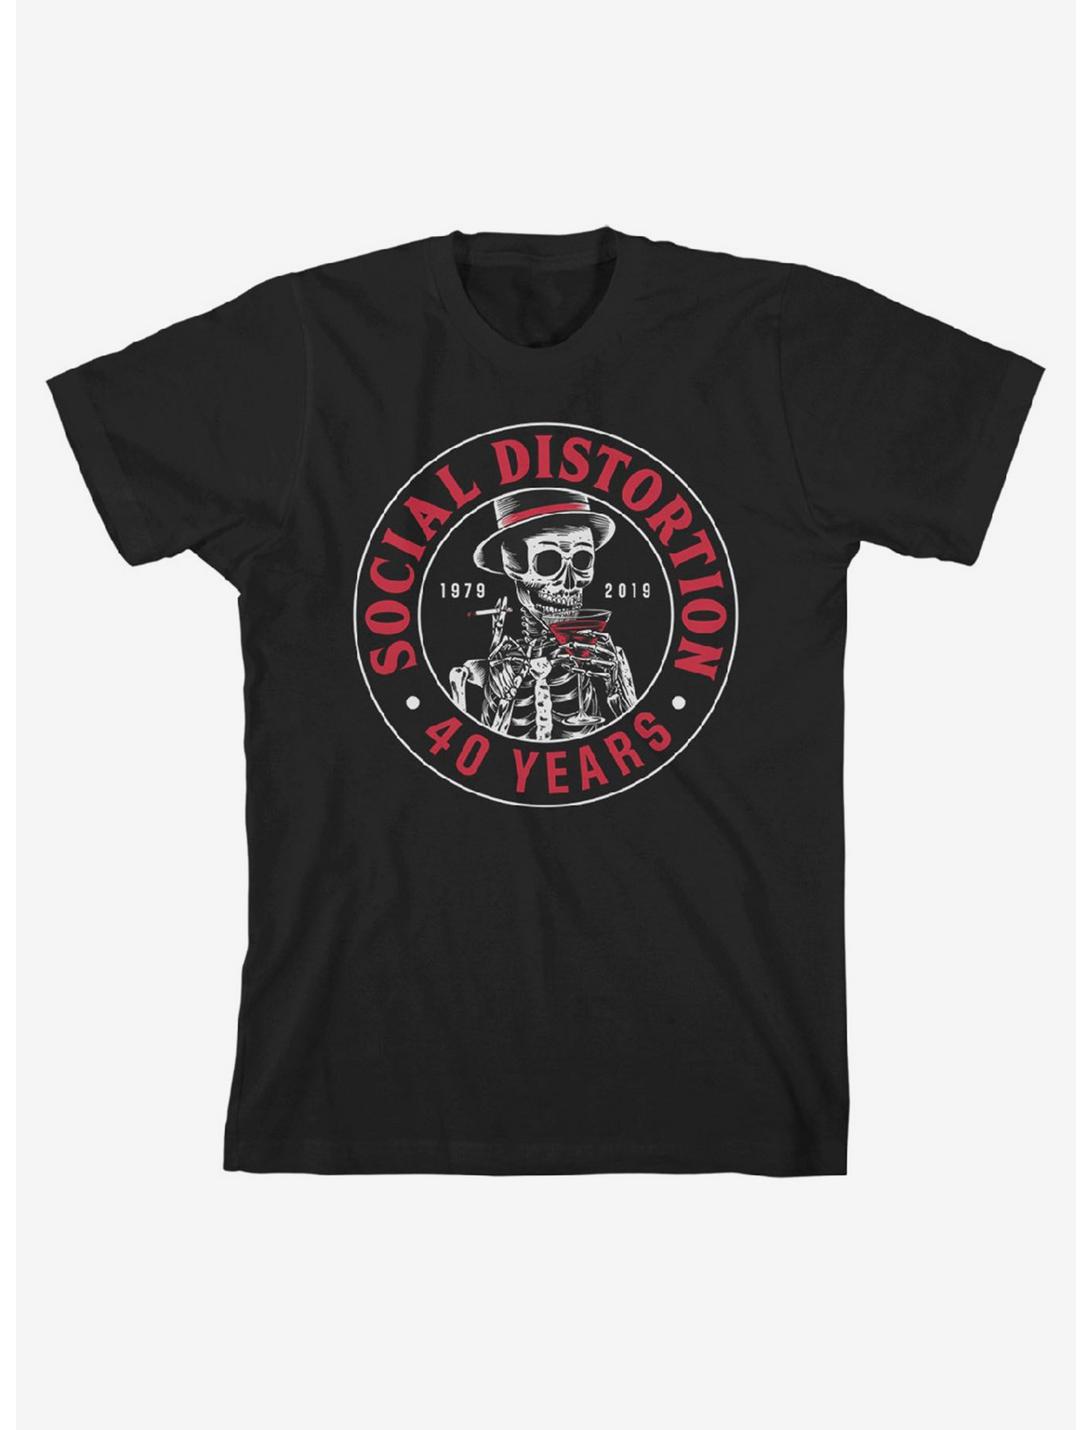 Social Distortion 40 Years Girls T-Shirt, BLACK, hi-res